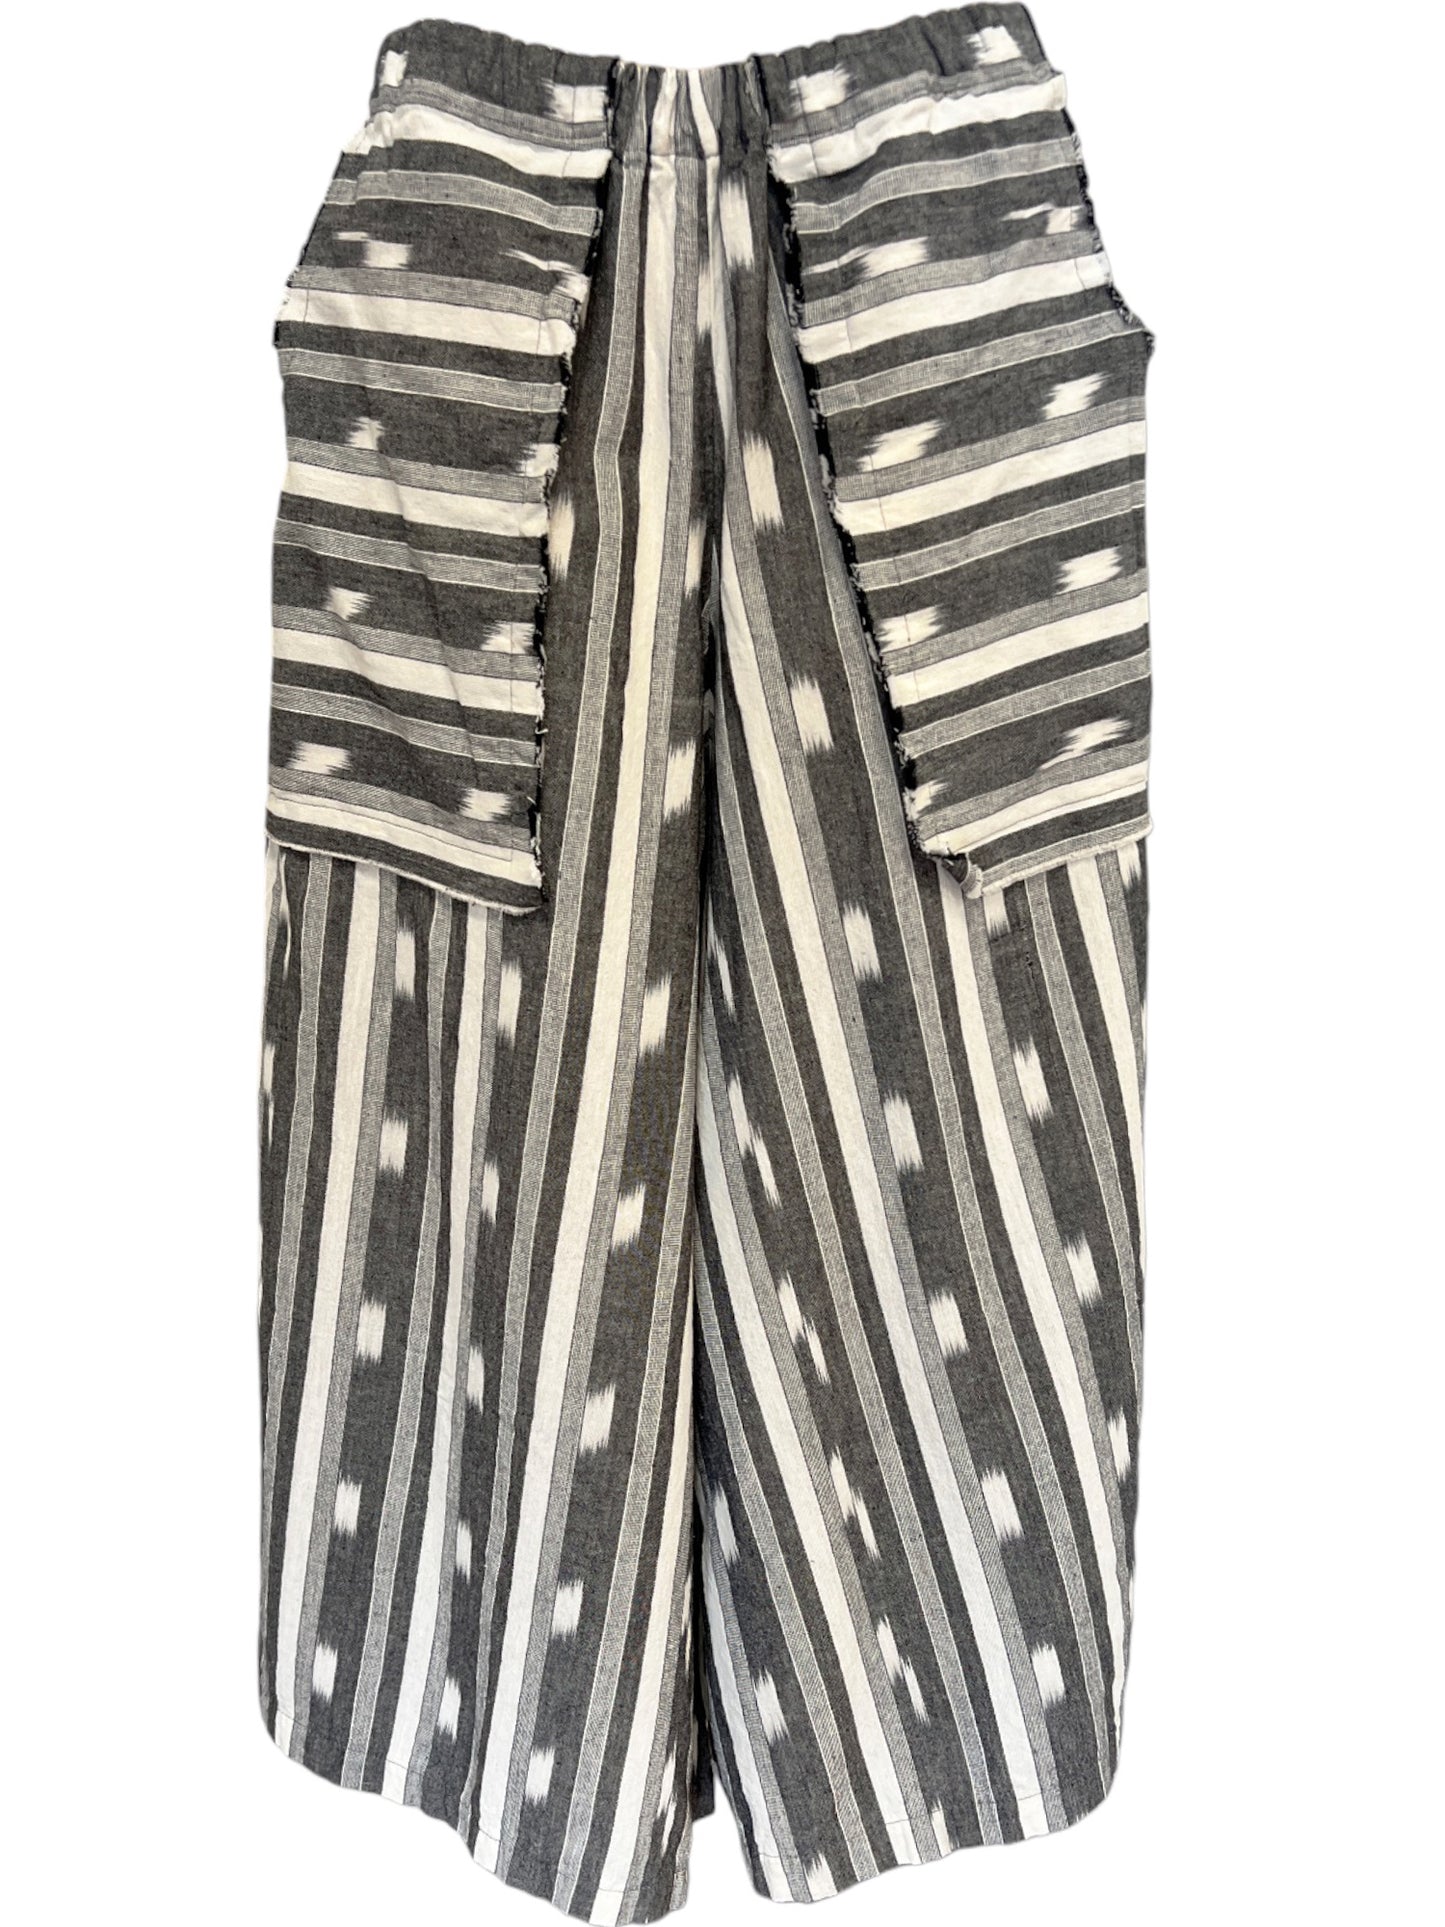 Make This Palazzo Pant Design with Printed Fabric #shorts 